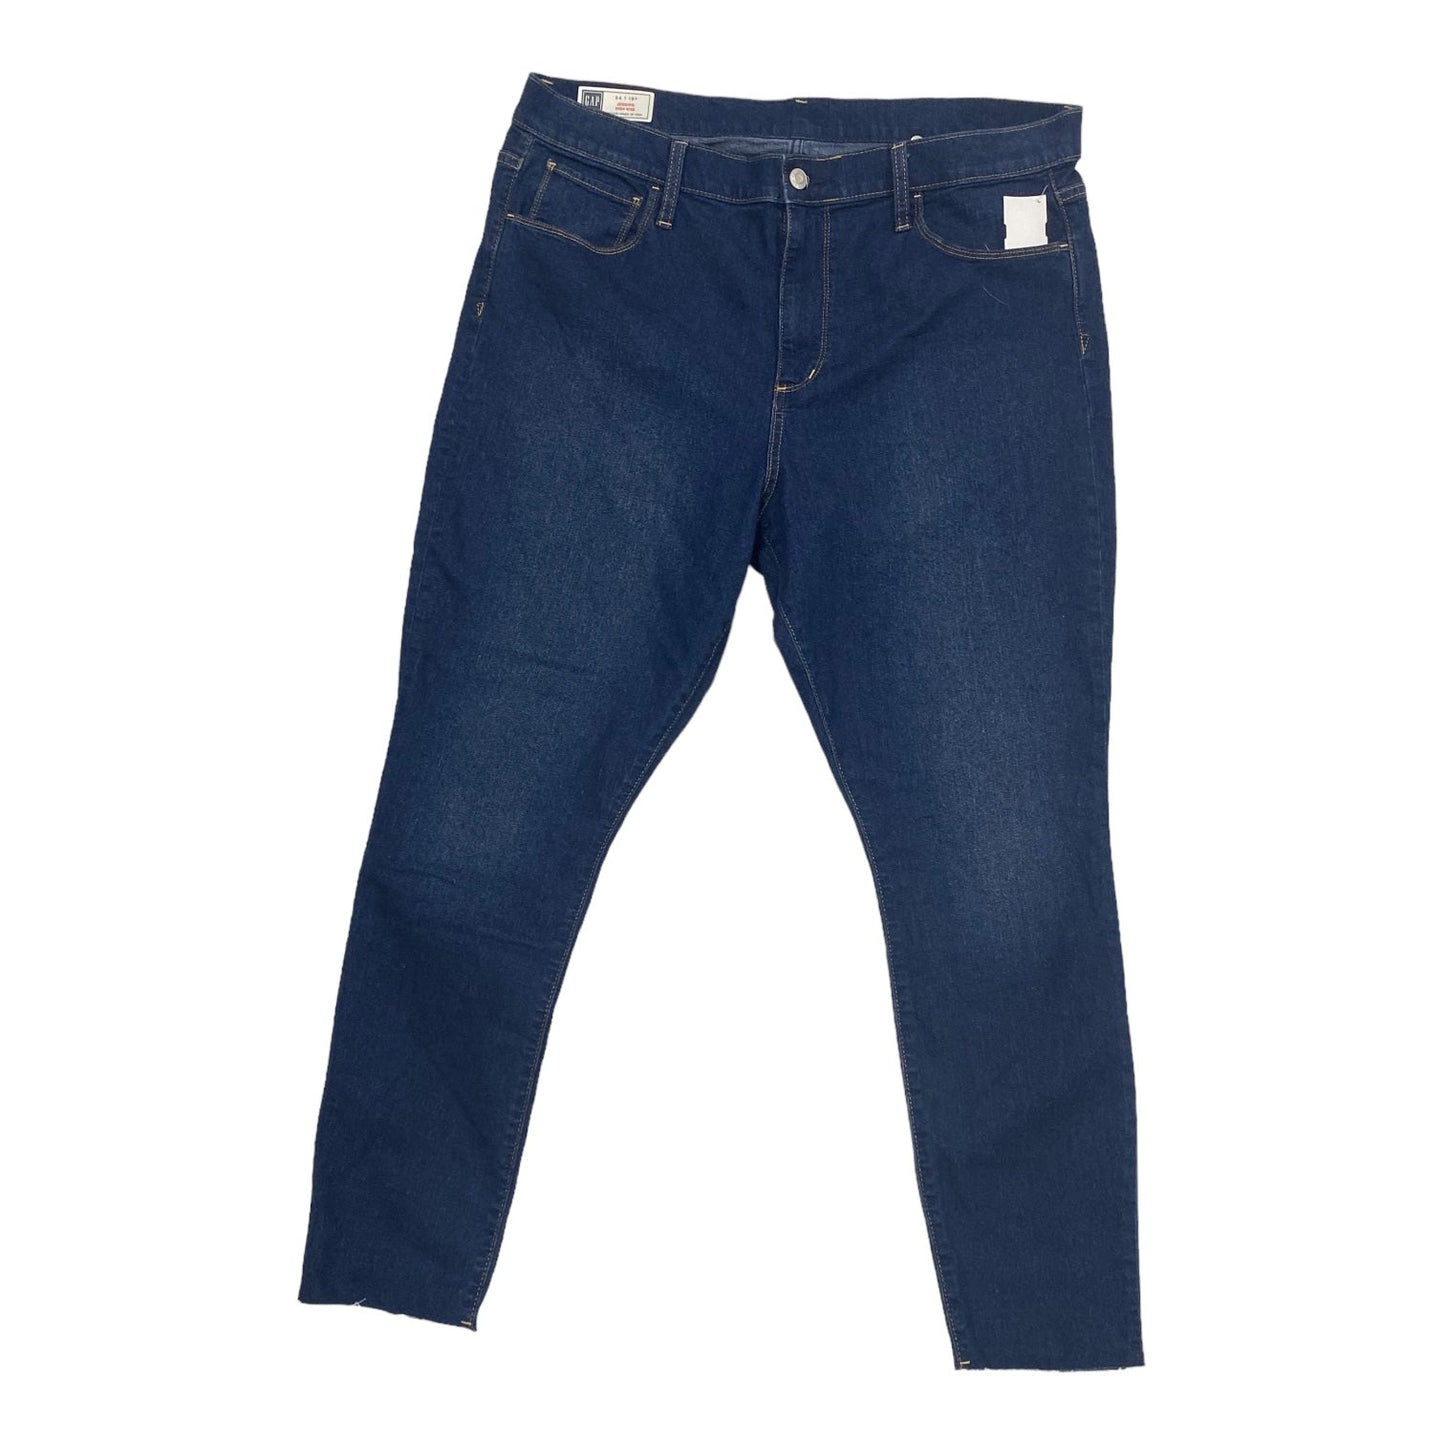 Blue Denim Jeans Jeggings Gap, Size 18